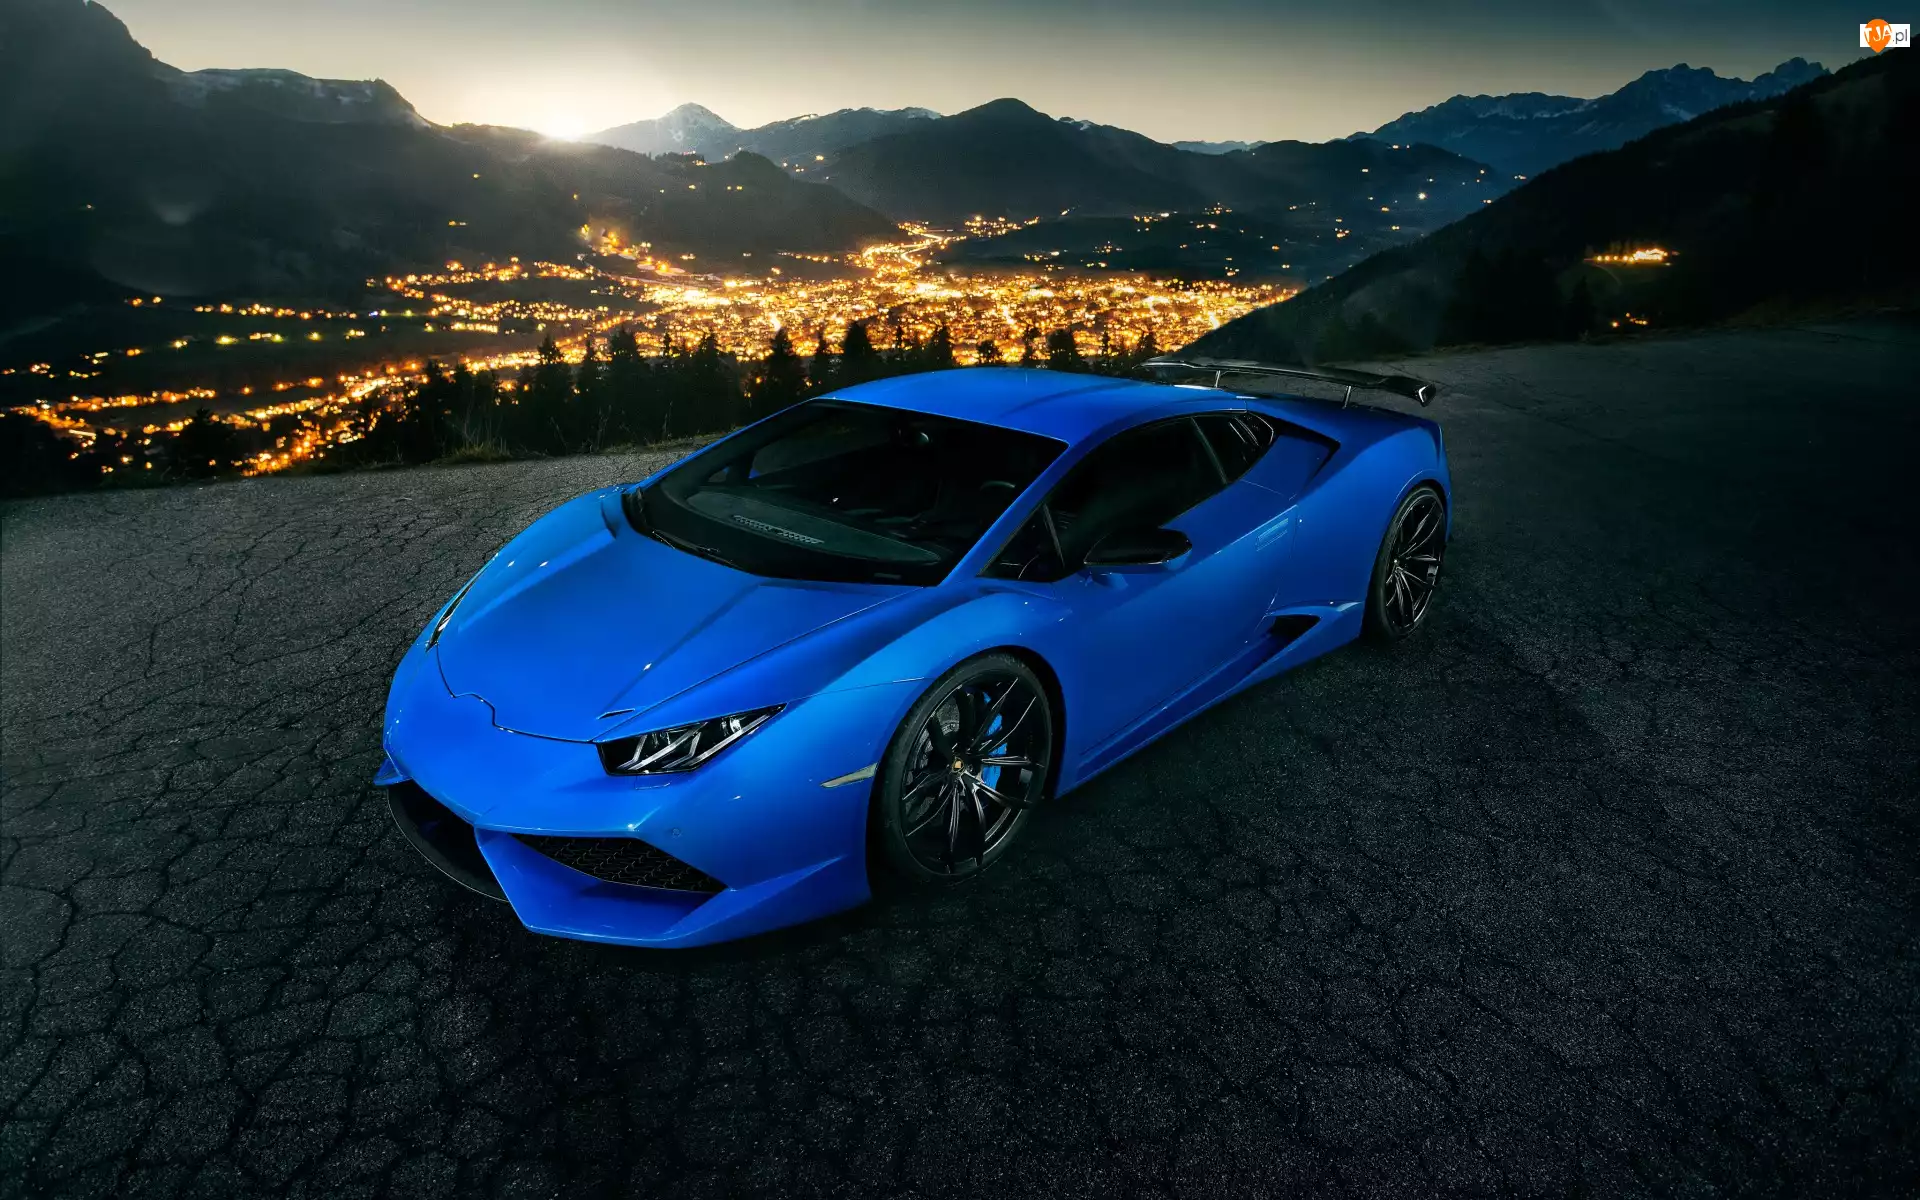 Lamborghini Huracan, Niebieskie